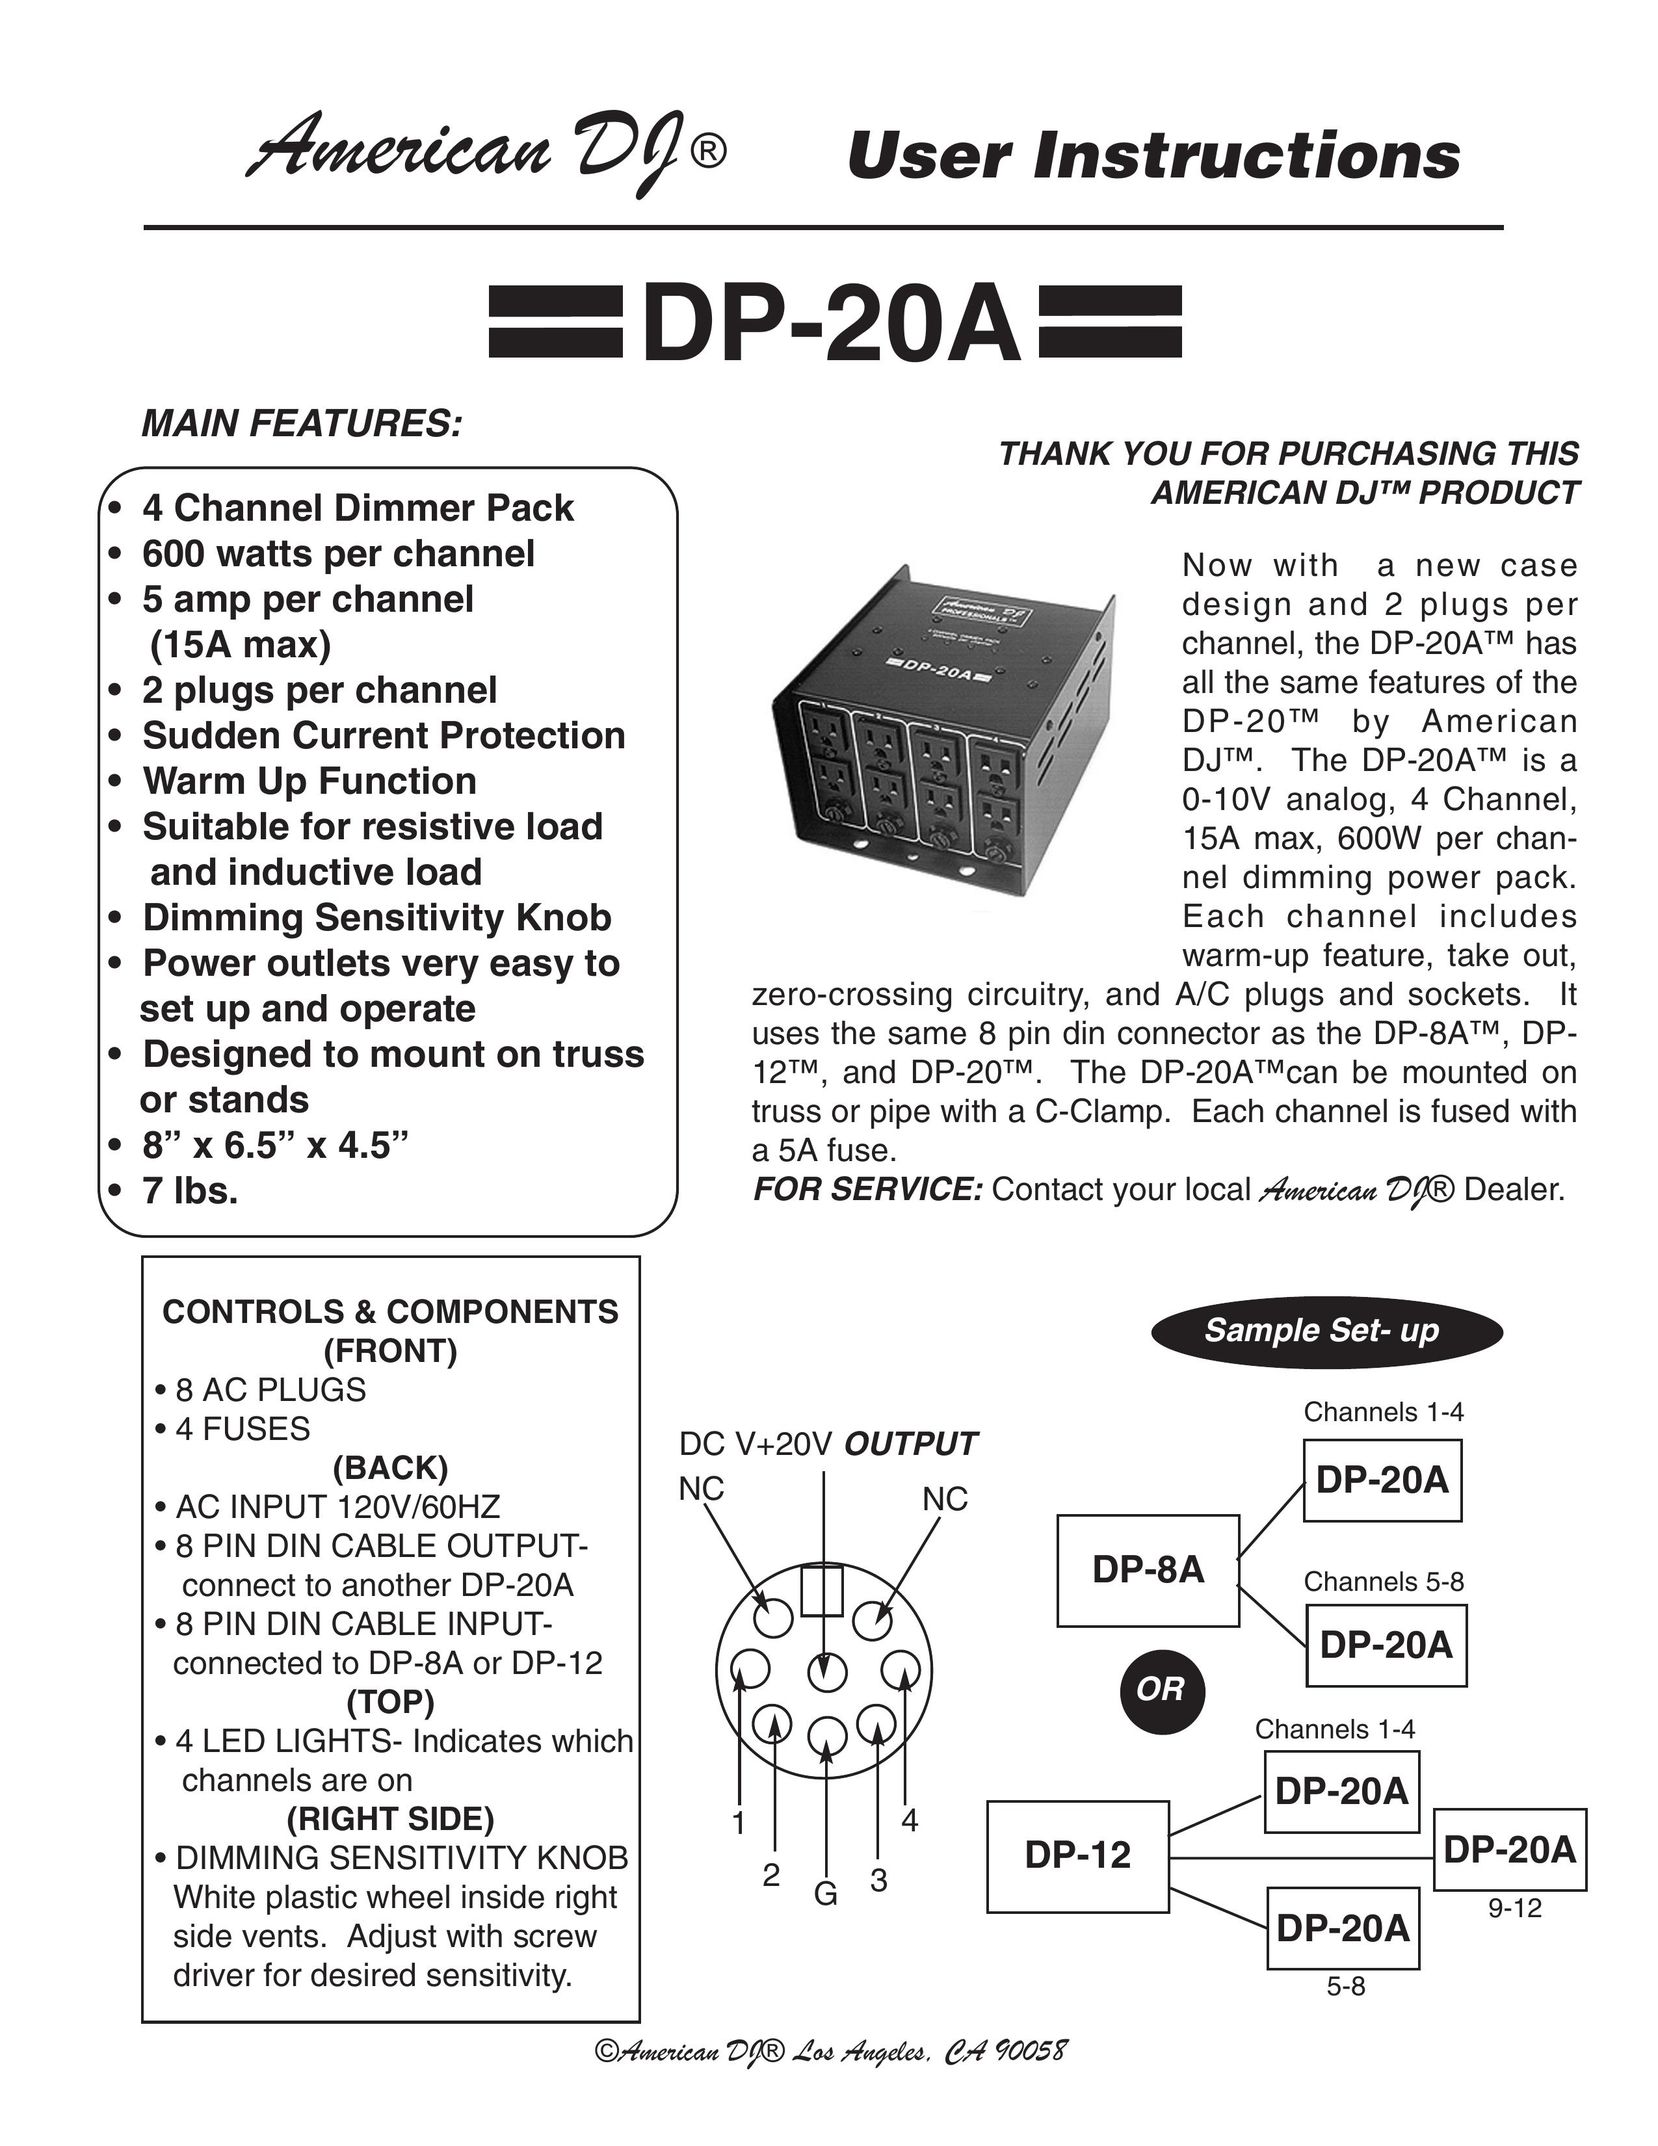 American DJ DP-20A Power Supply User Manual